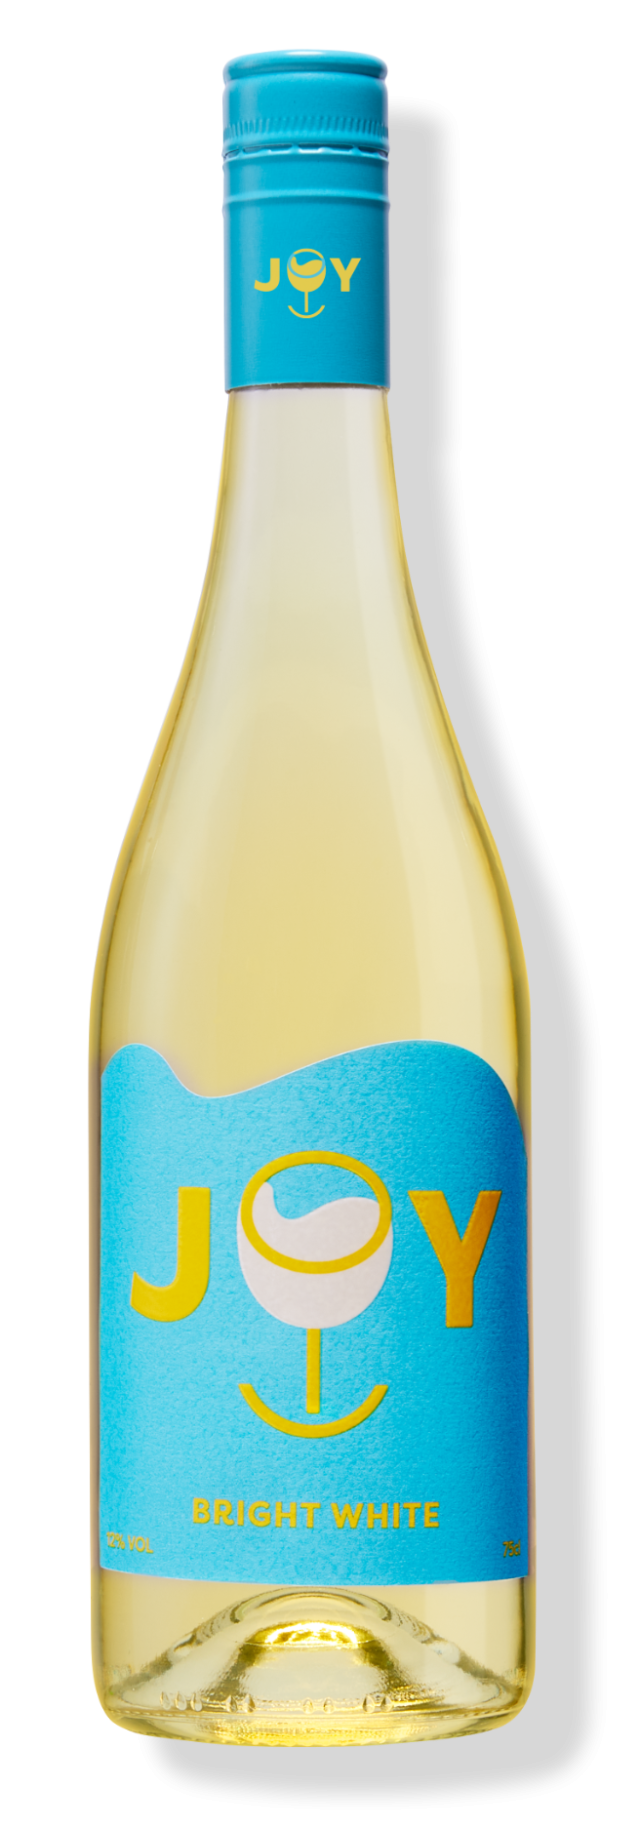 A bottle of Joy Bright White wine.